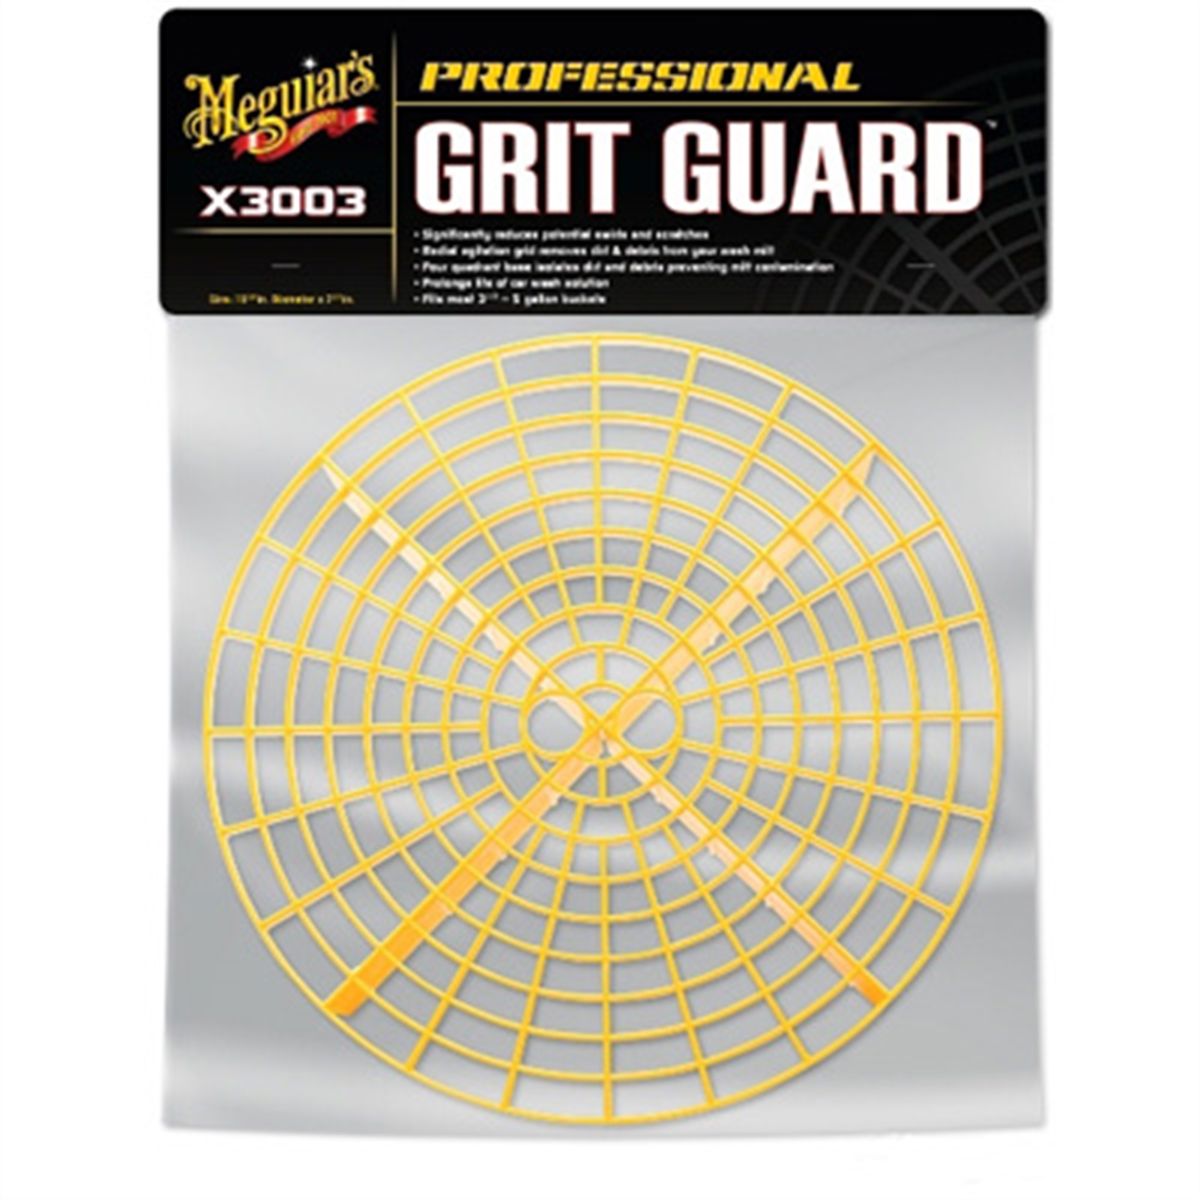 Professional Grit Guard